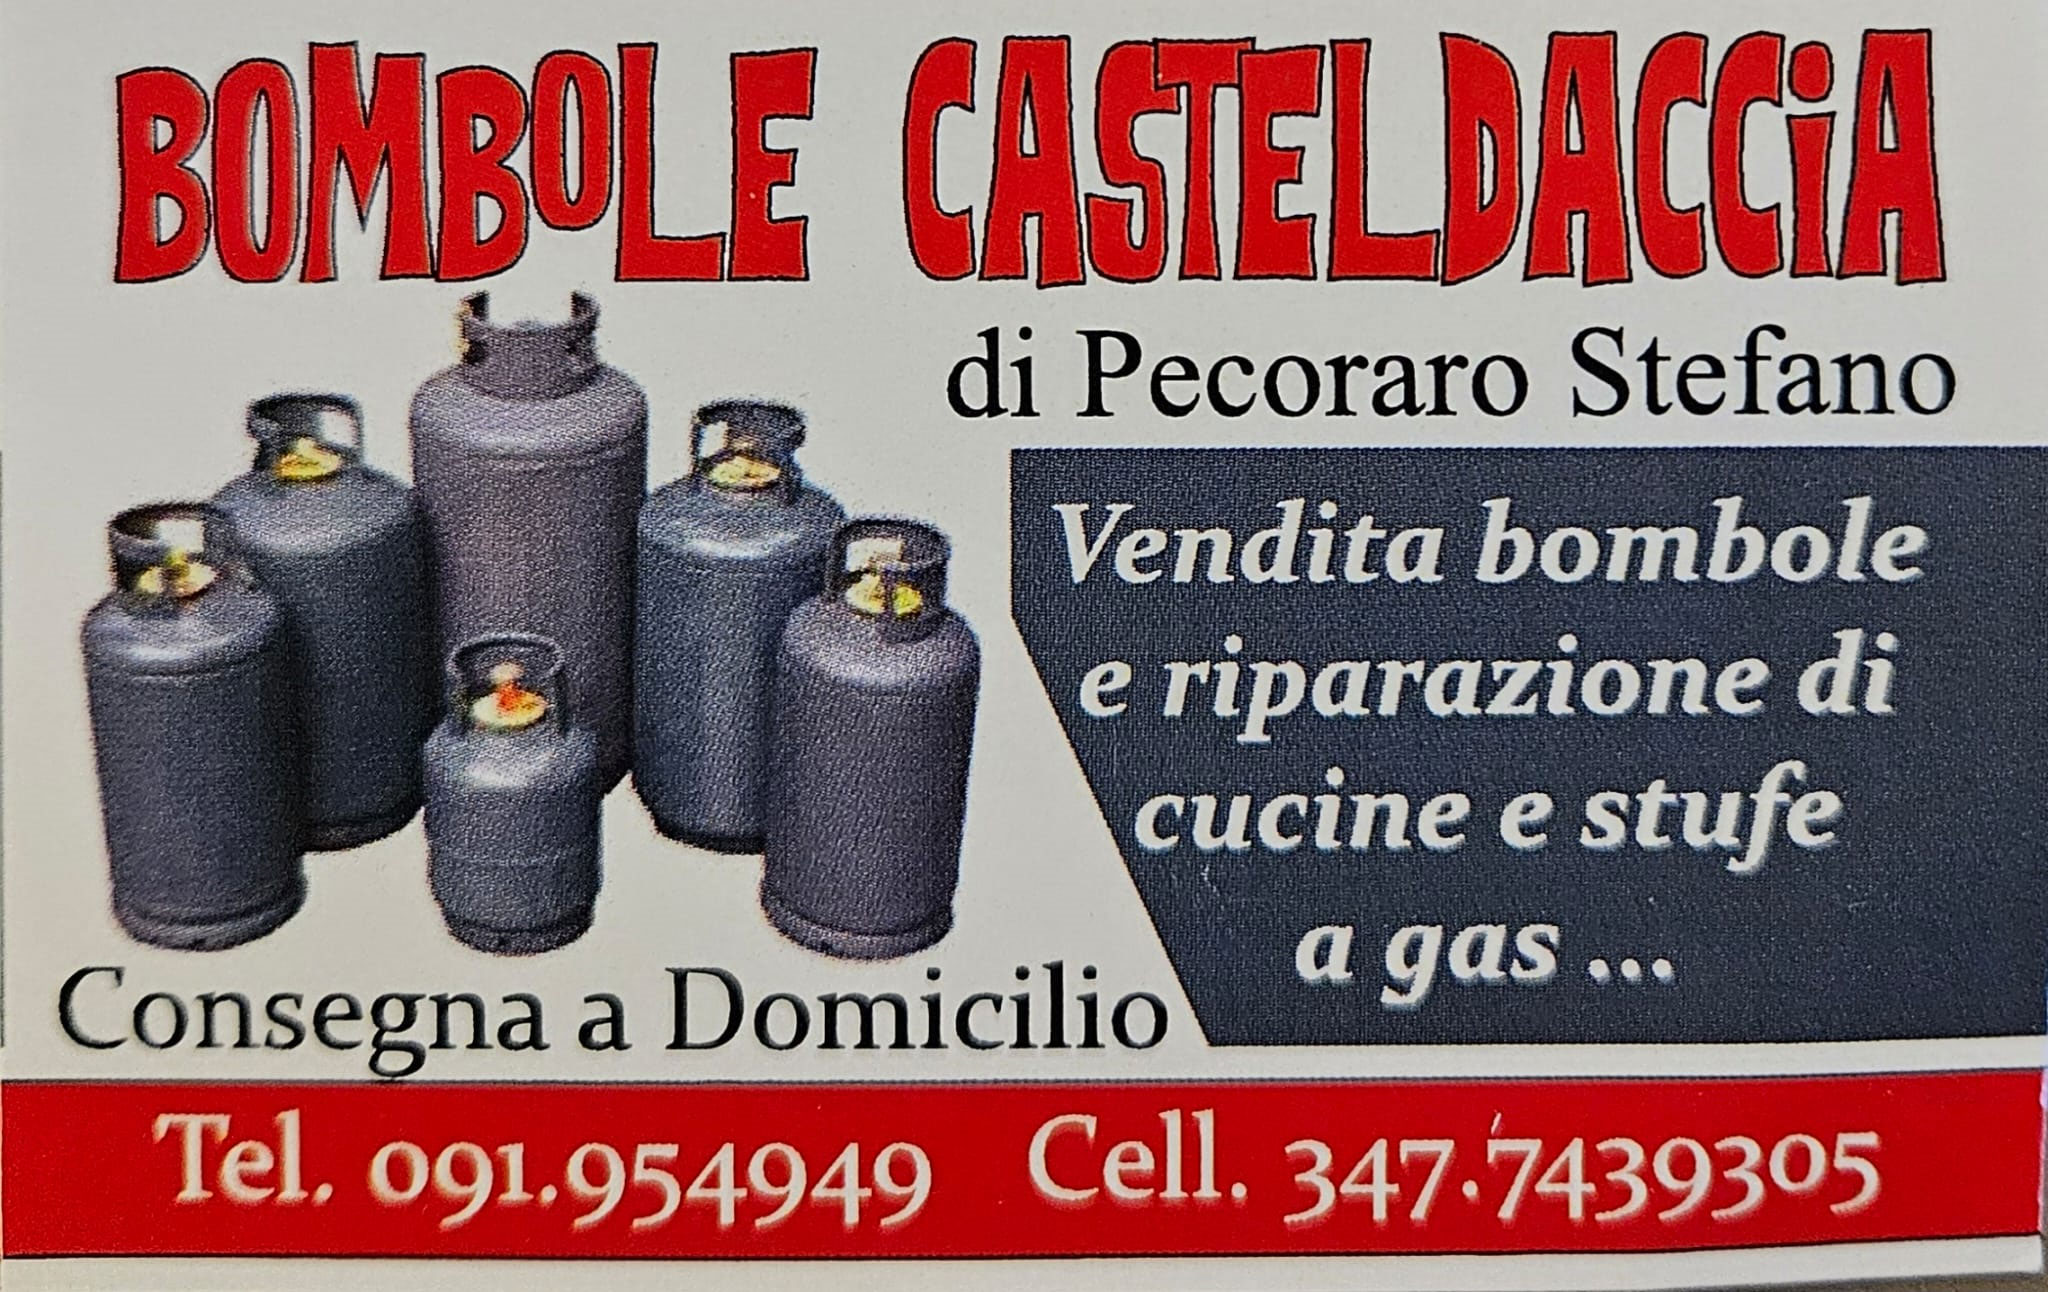 Bombole Casteldaccia